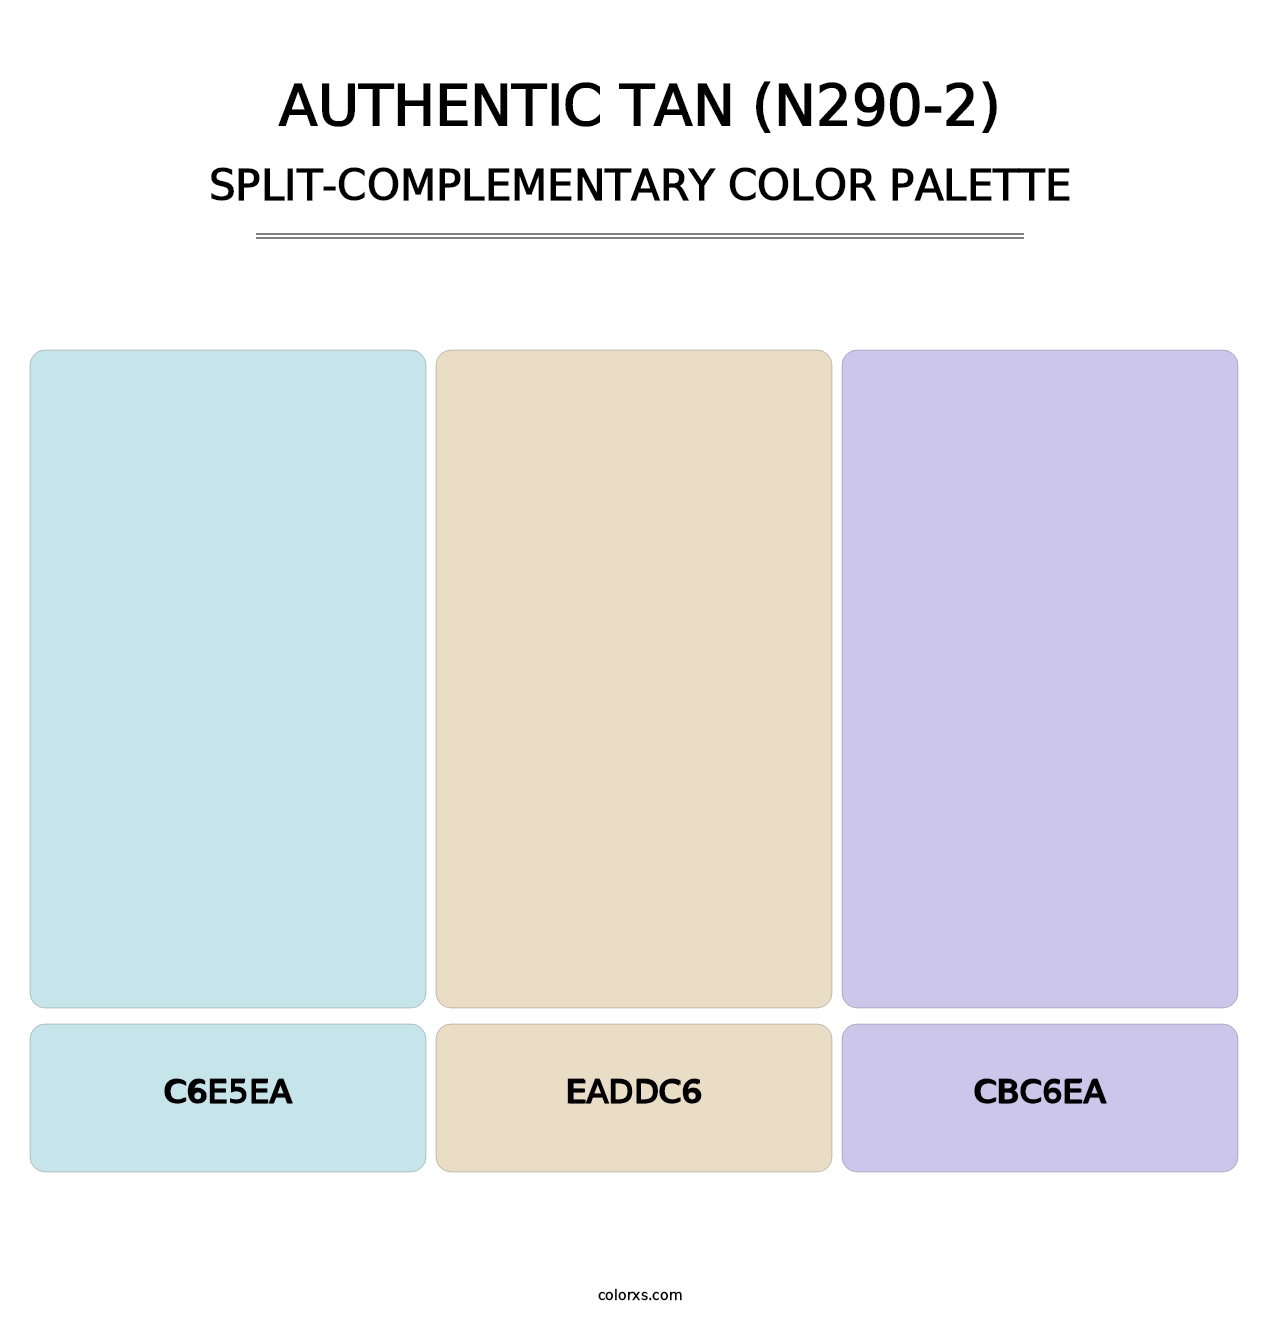 Authentic Tan (N290-2) - Split-Complementary Color Palette